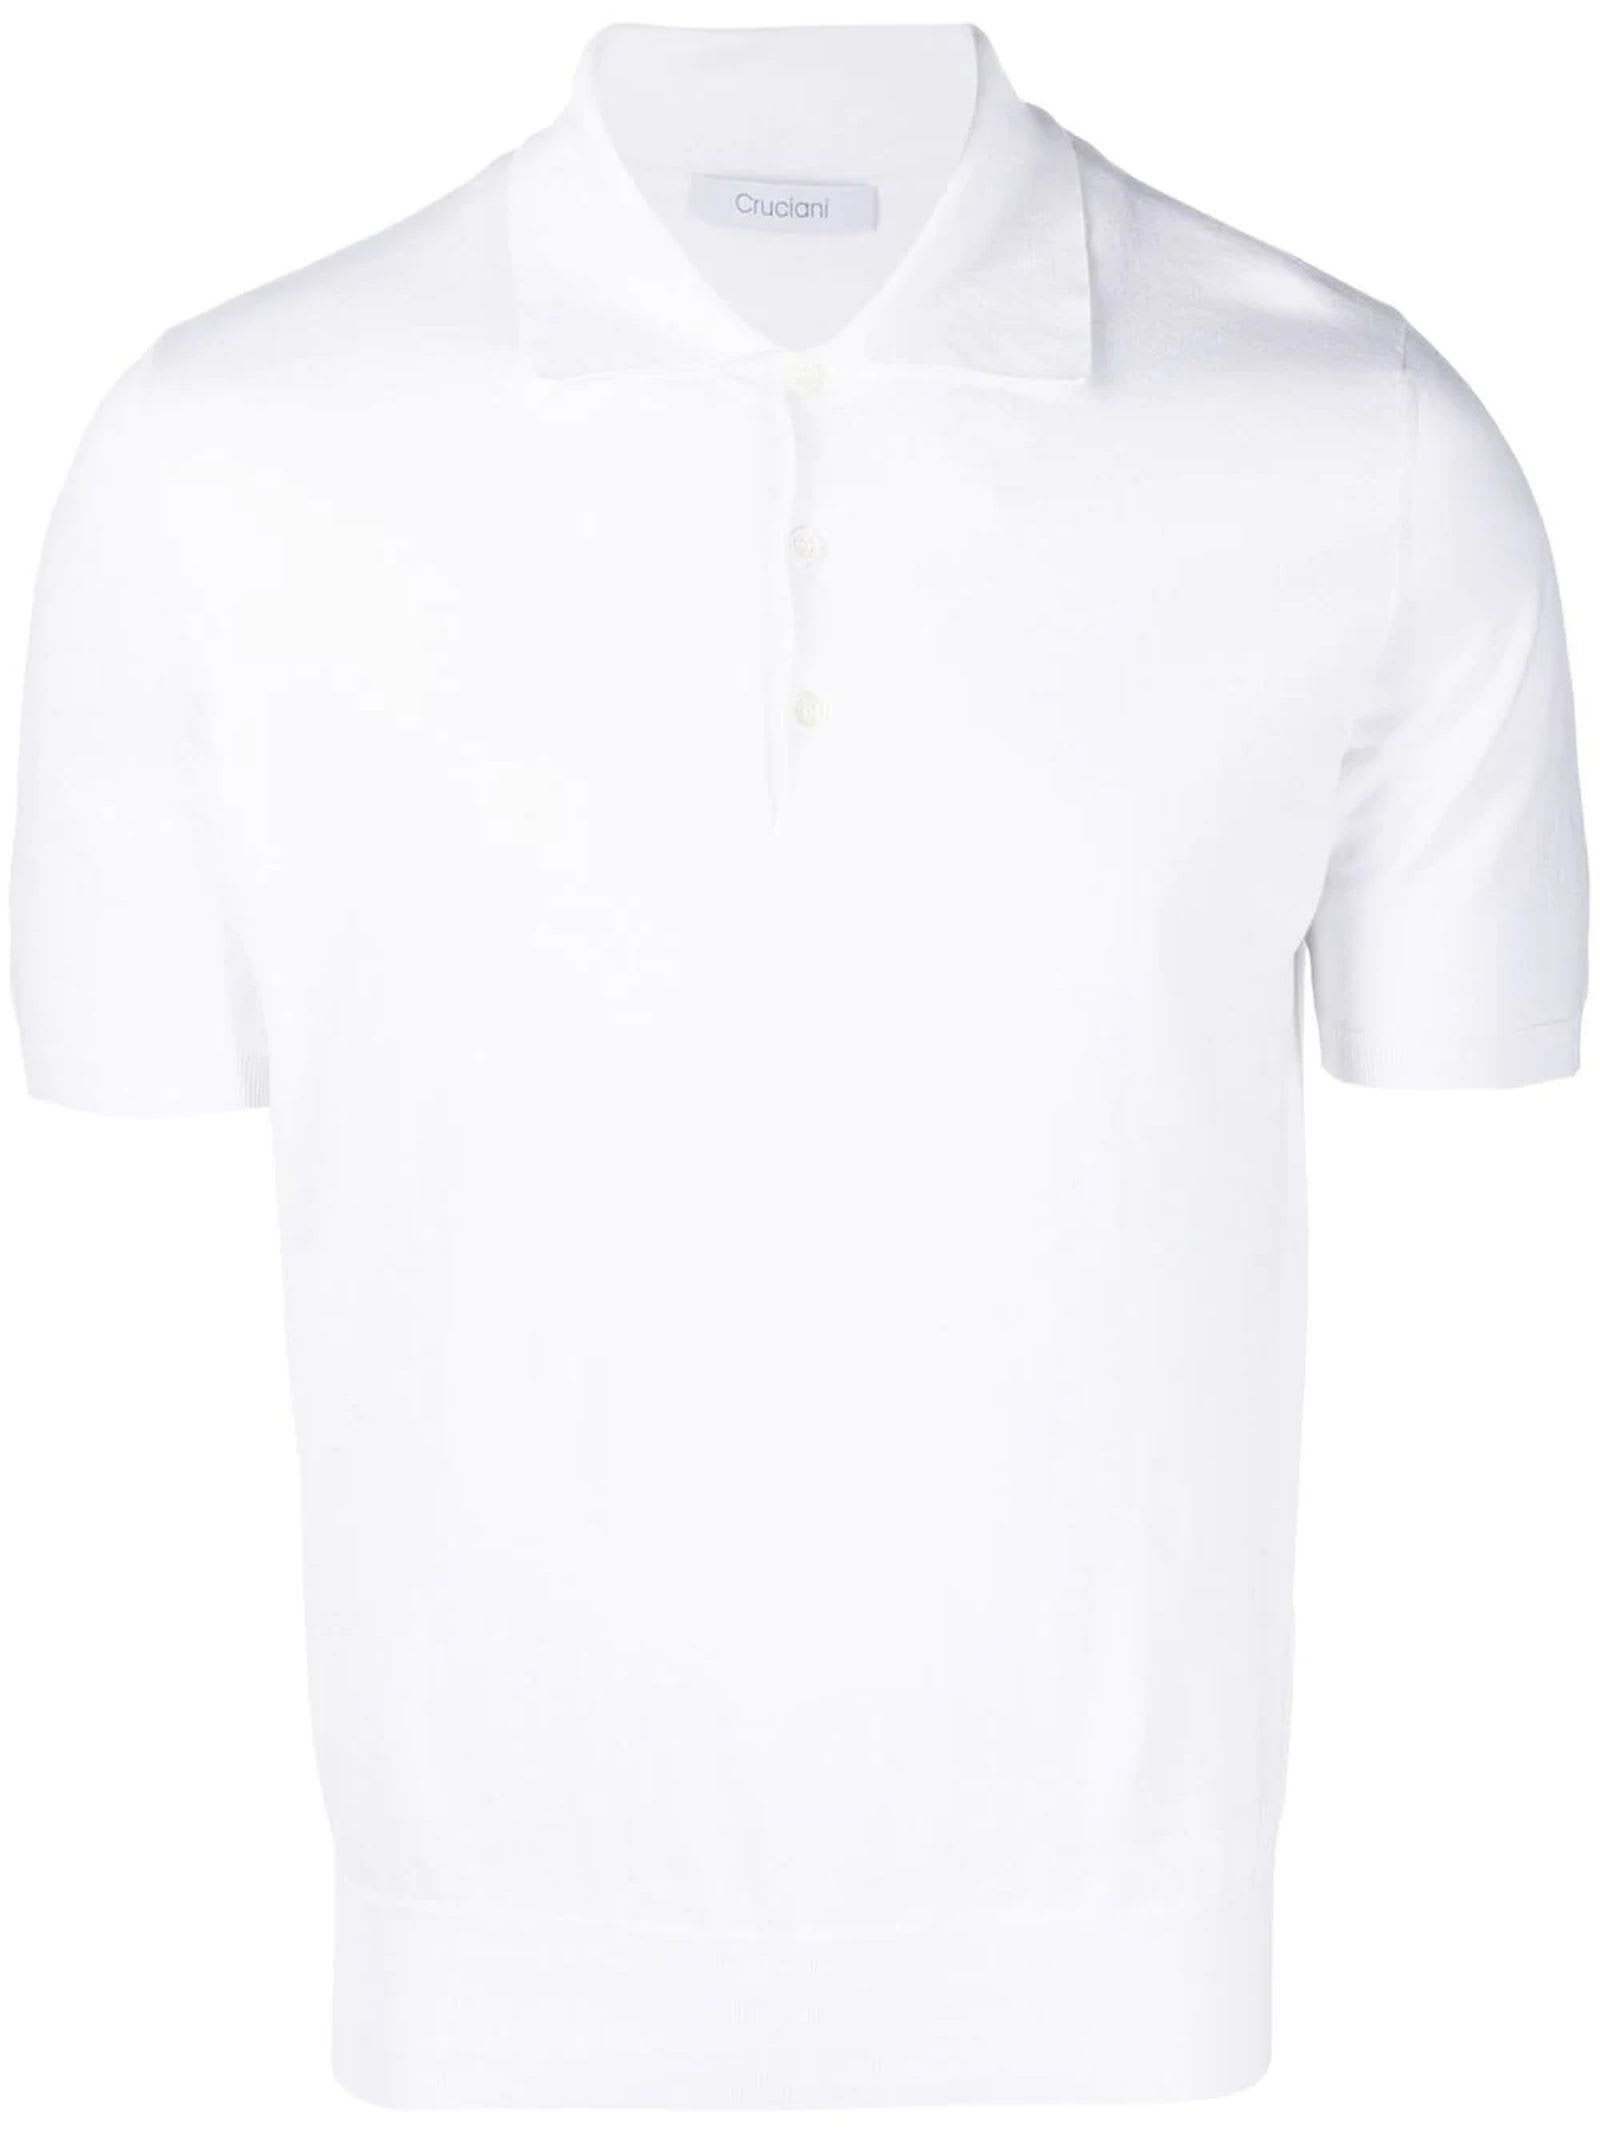 Cruciani Spread-collar Polo Shirt